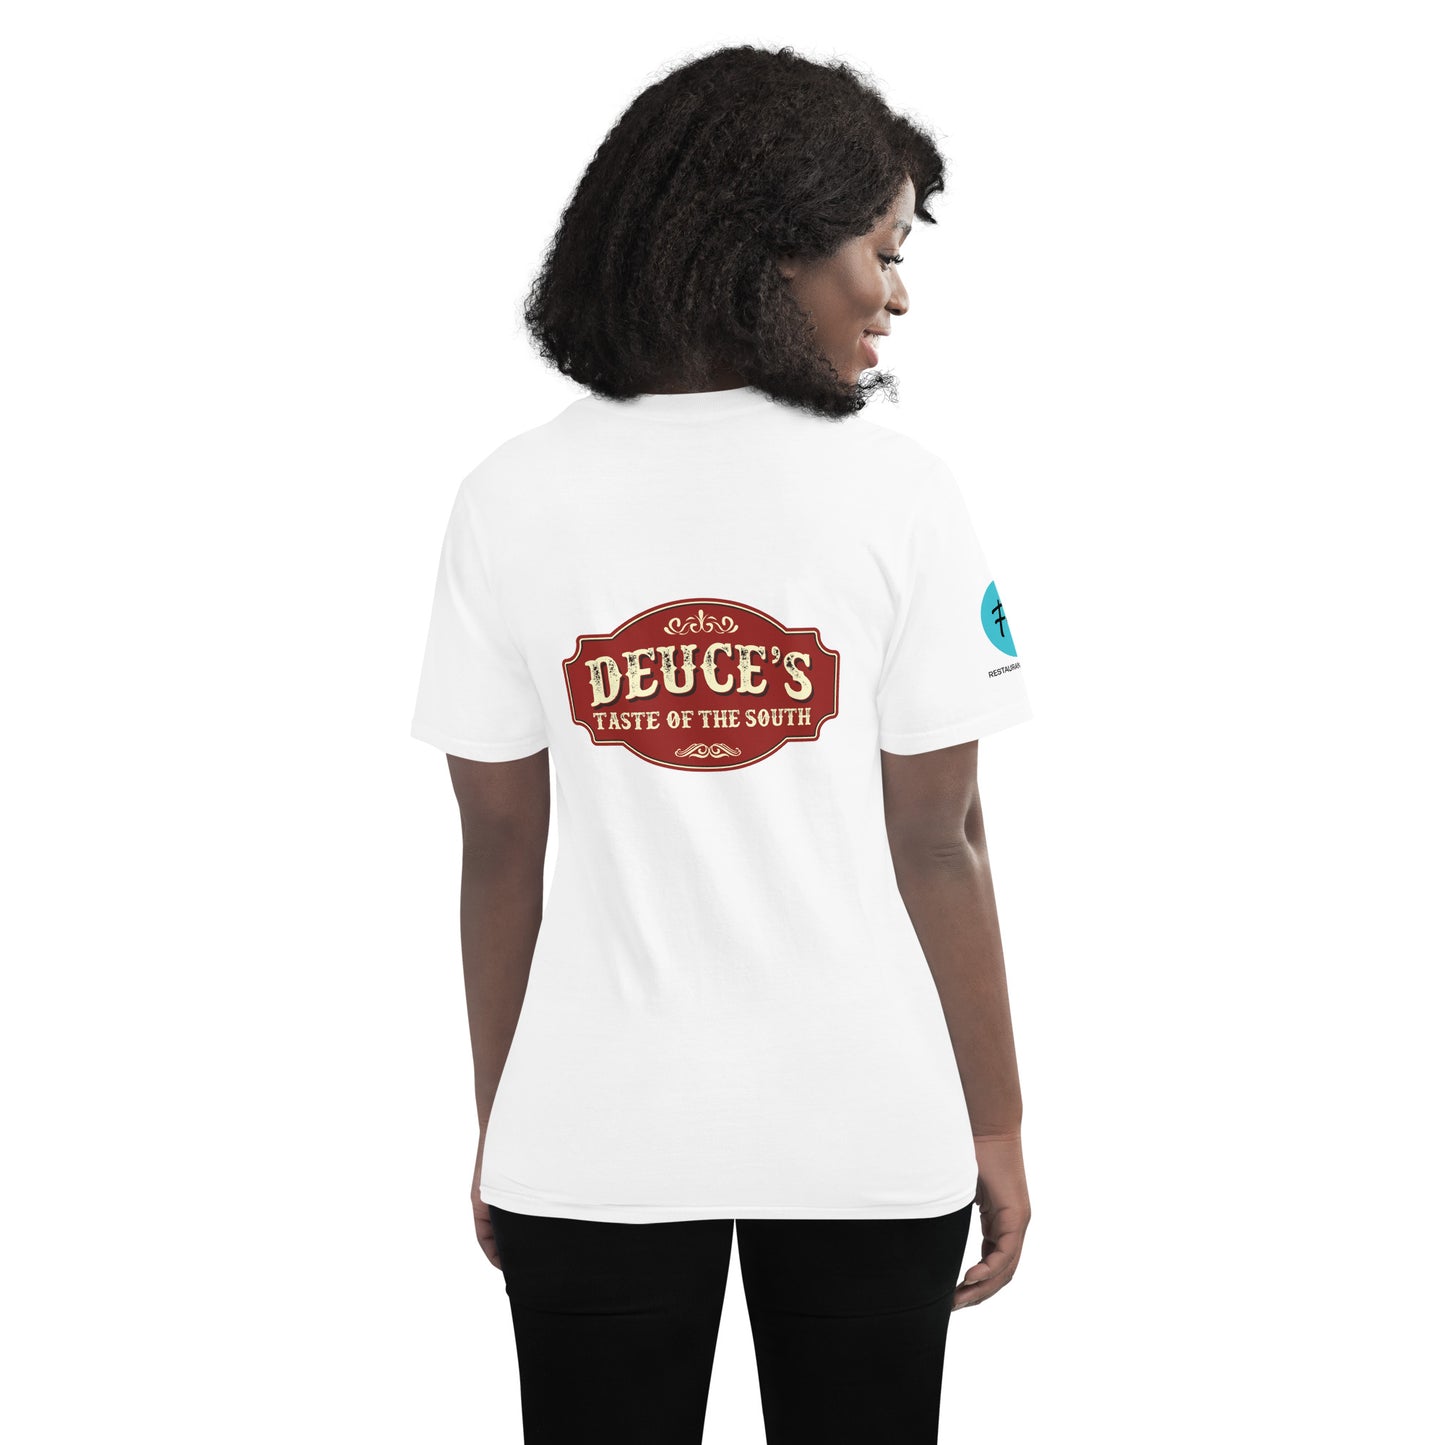 Deuce's Taste of the South Short-Sleeve T-Shirt